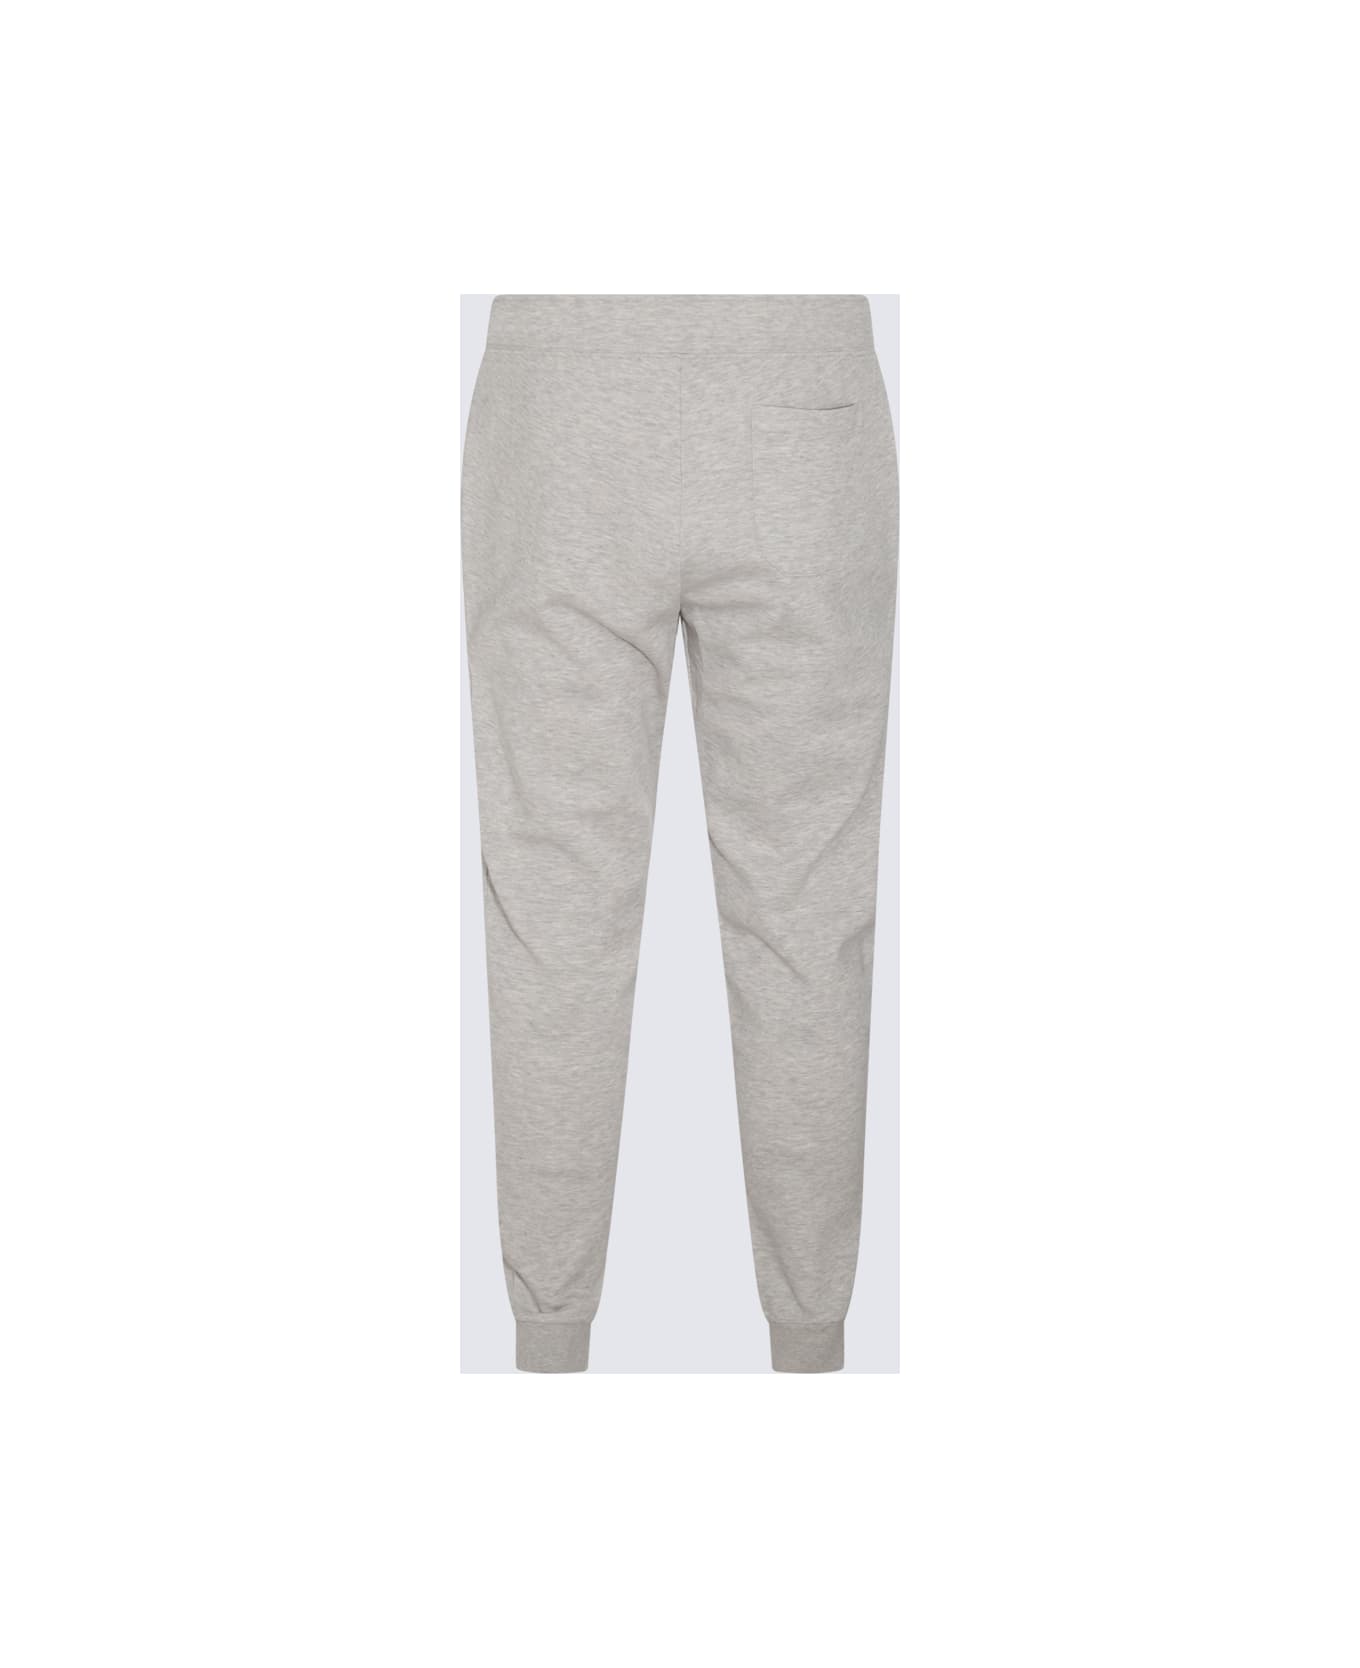 Polo Ralph Lauren Lgith Grey Cotton Pants - LT SPORT HEATHER